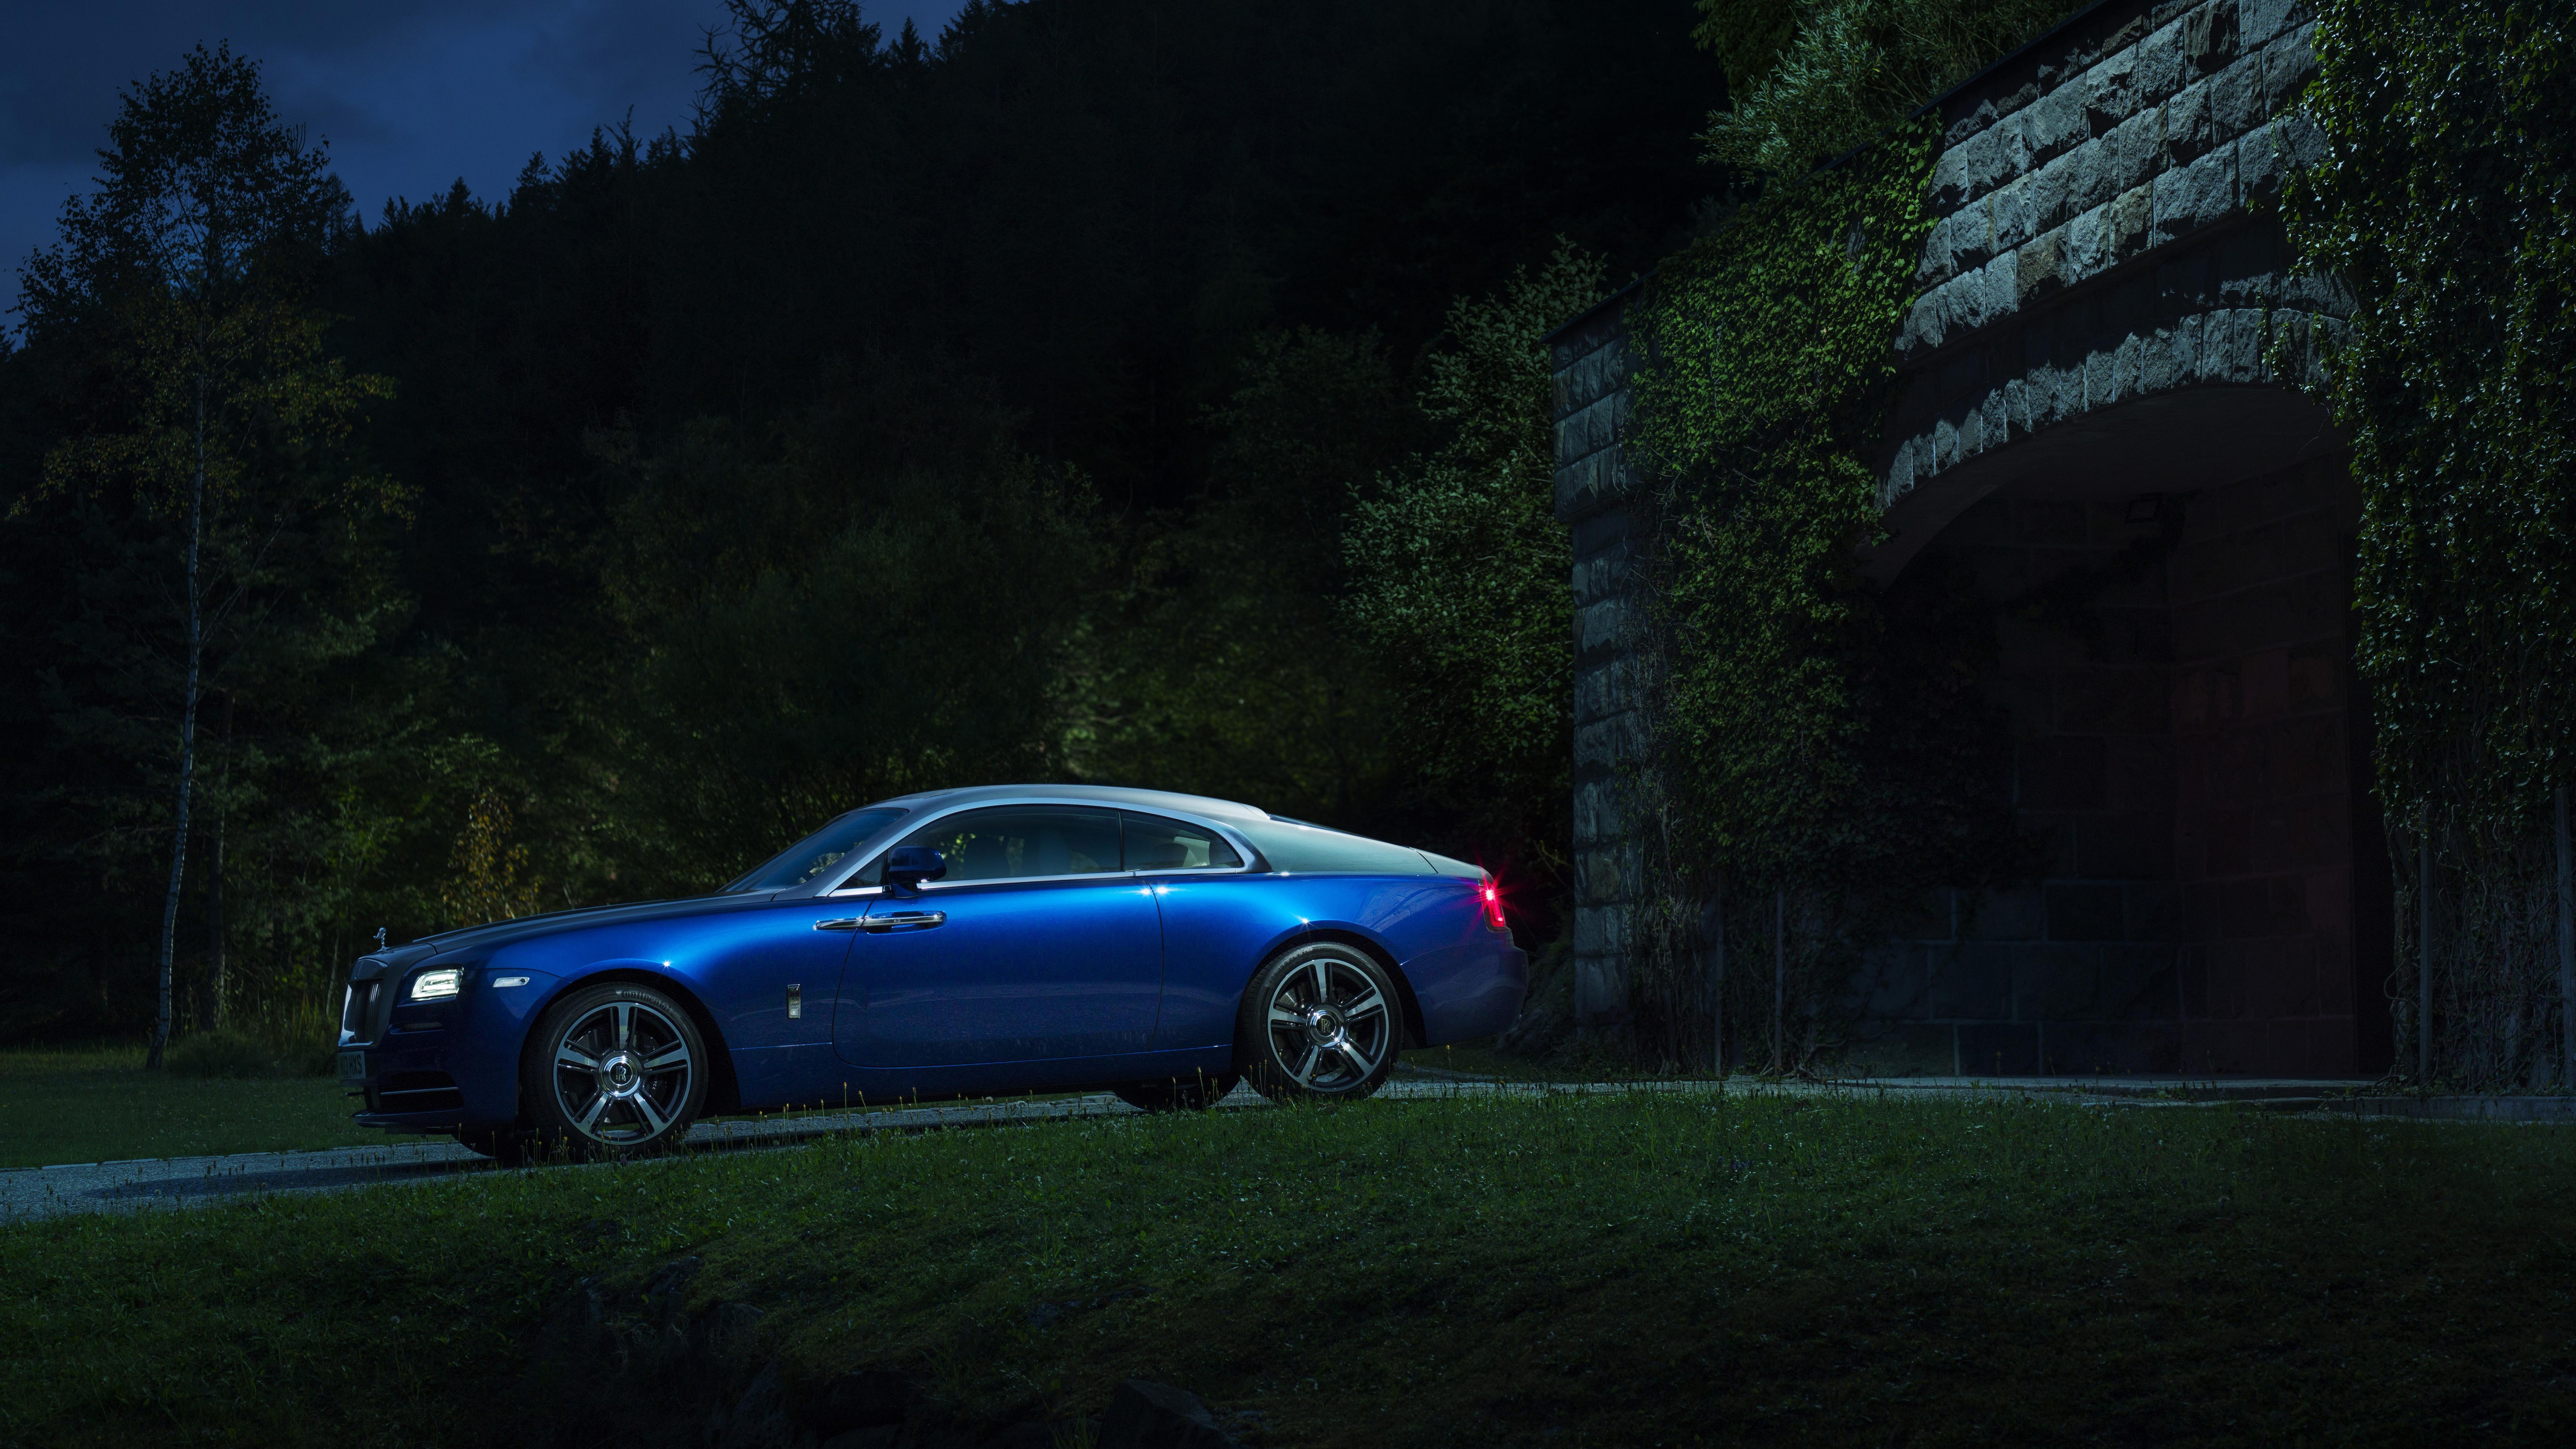 Rolls Royce Wraith 8k HD Cars, 4k Wallpaper, Image